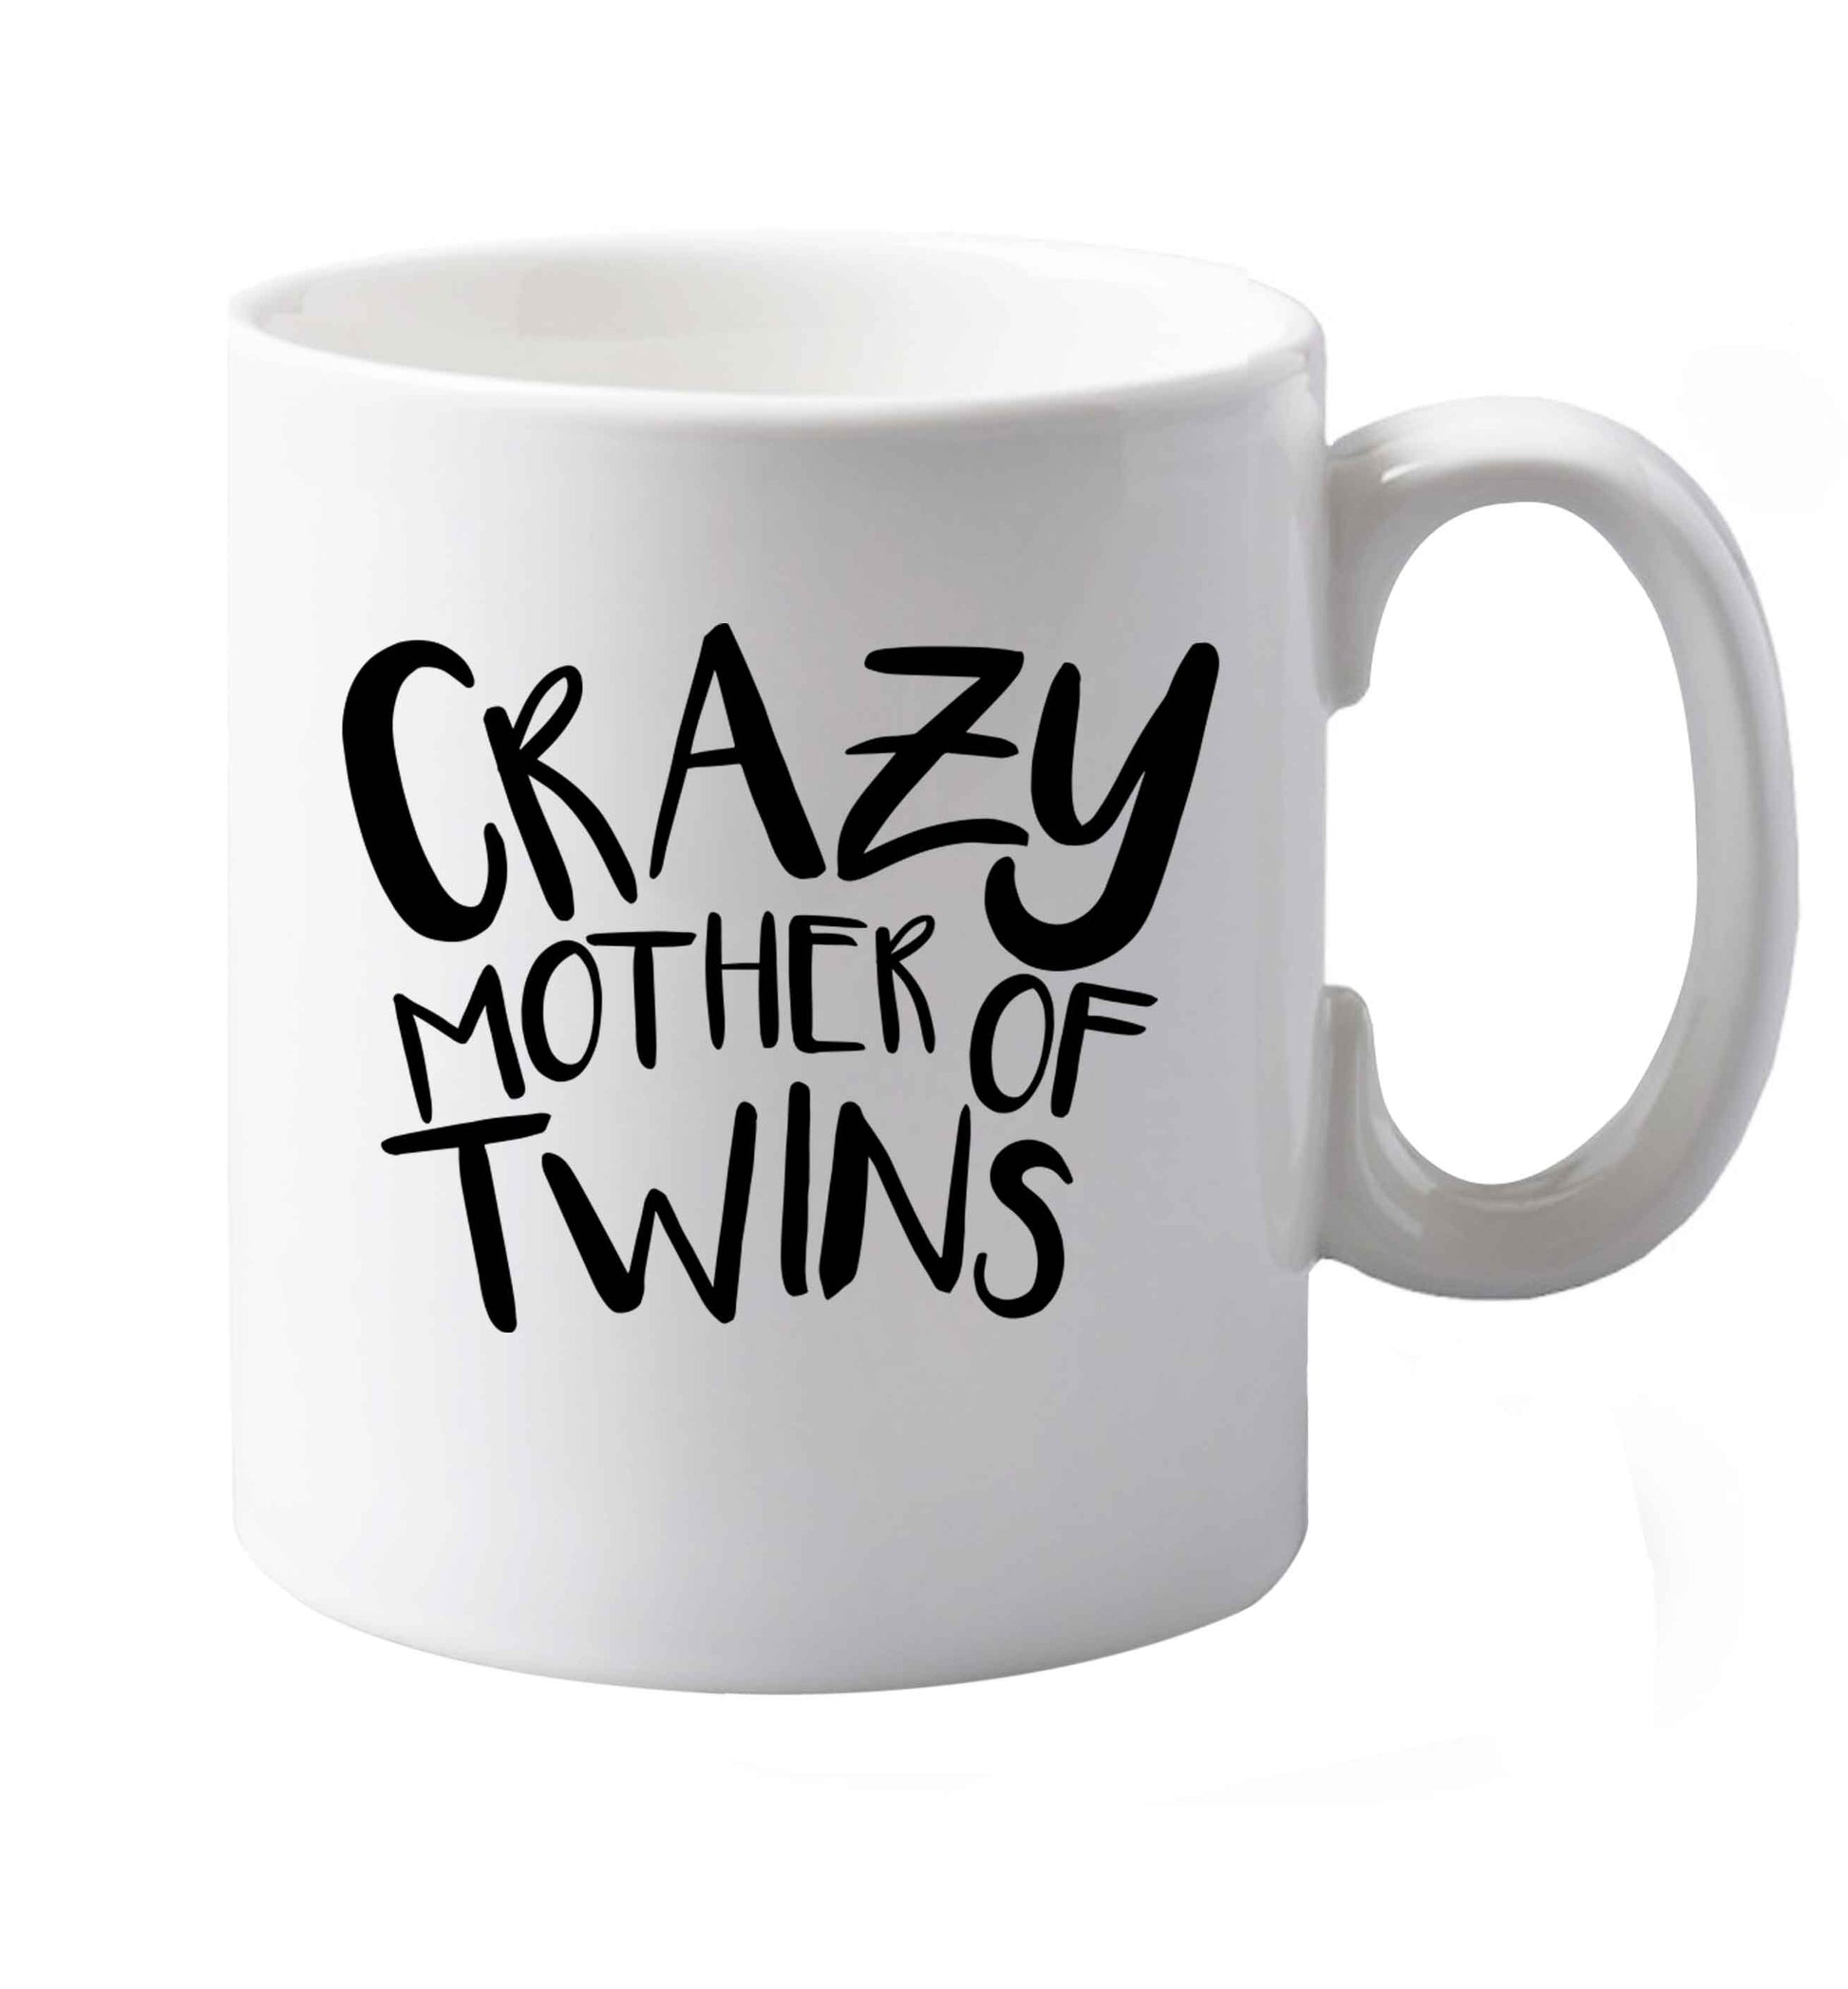 10 oz Crazy mother of twins ceramic mug both sides